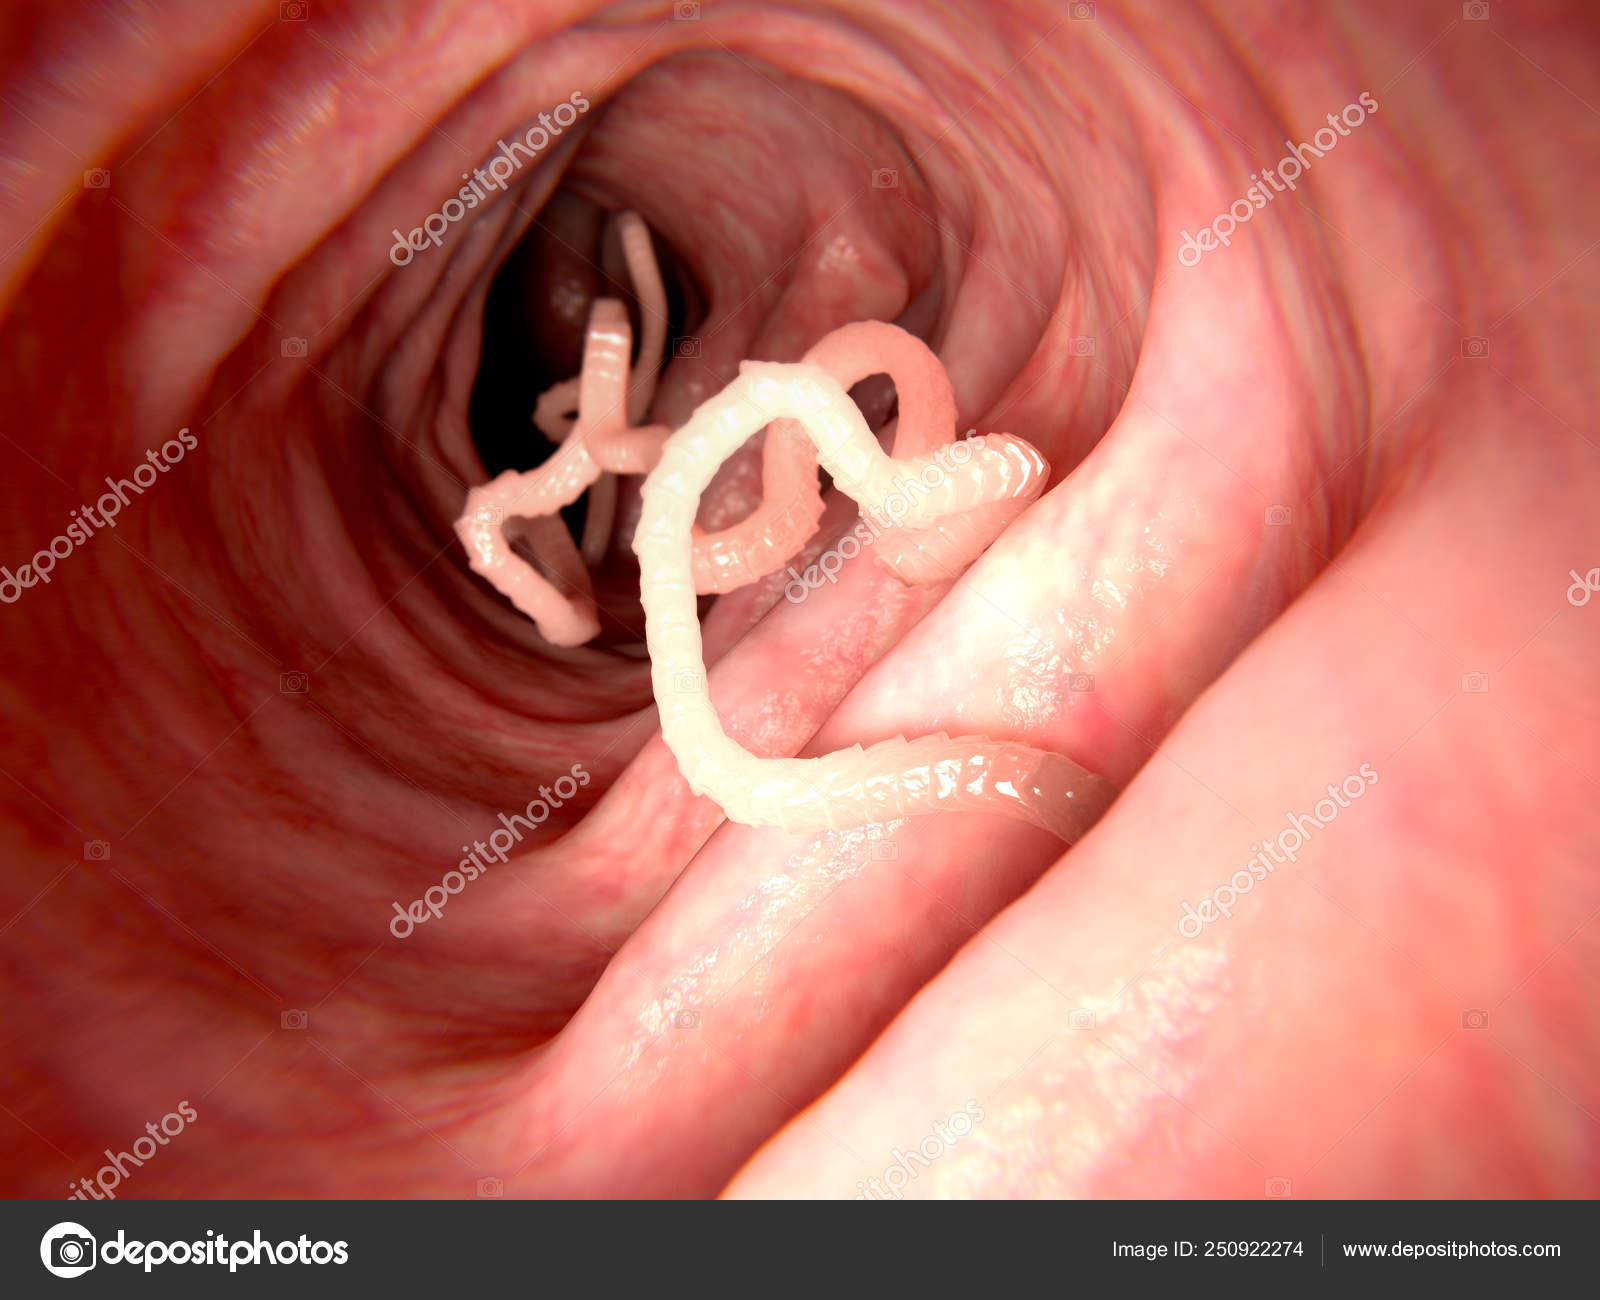 Parazitozele intestinale: giardioza si ascaridioza | Regina Maria - Paraziti digestivi